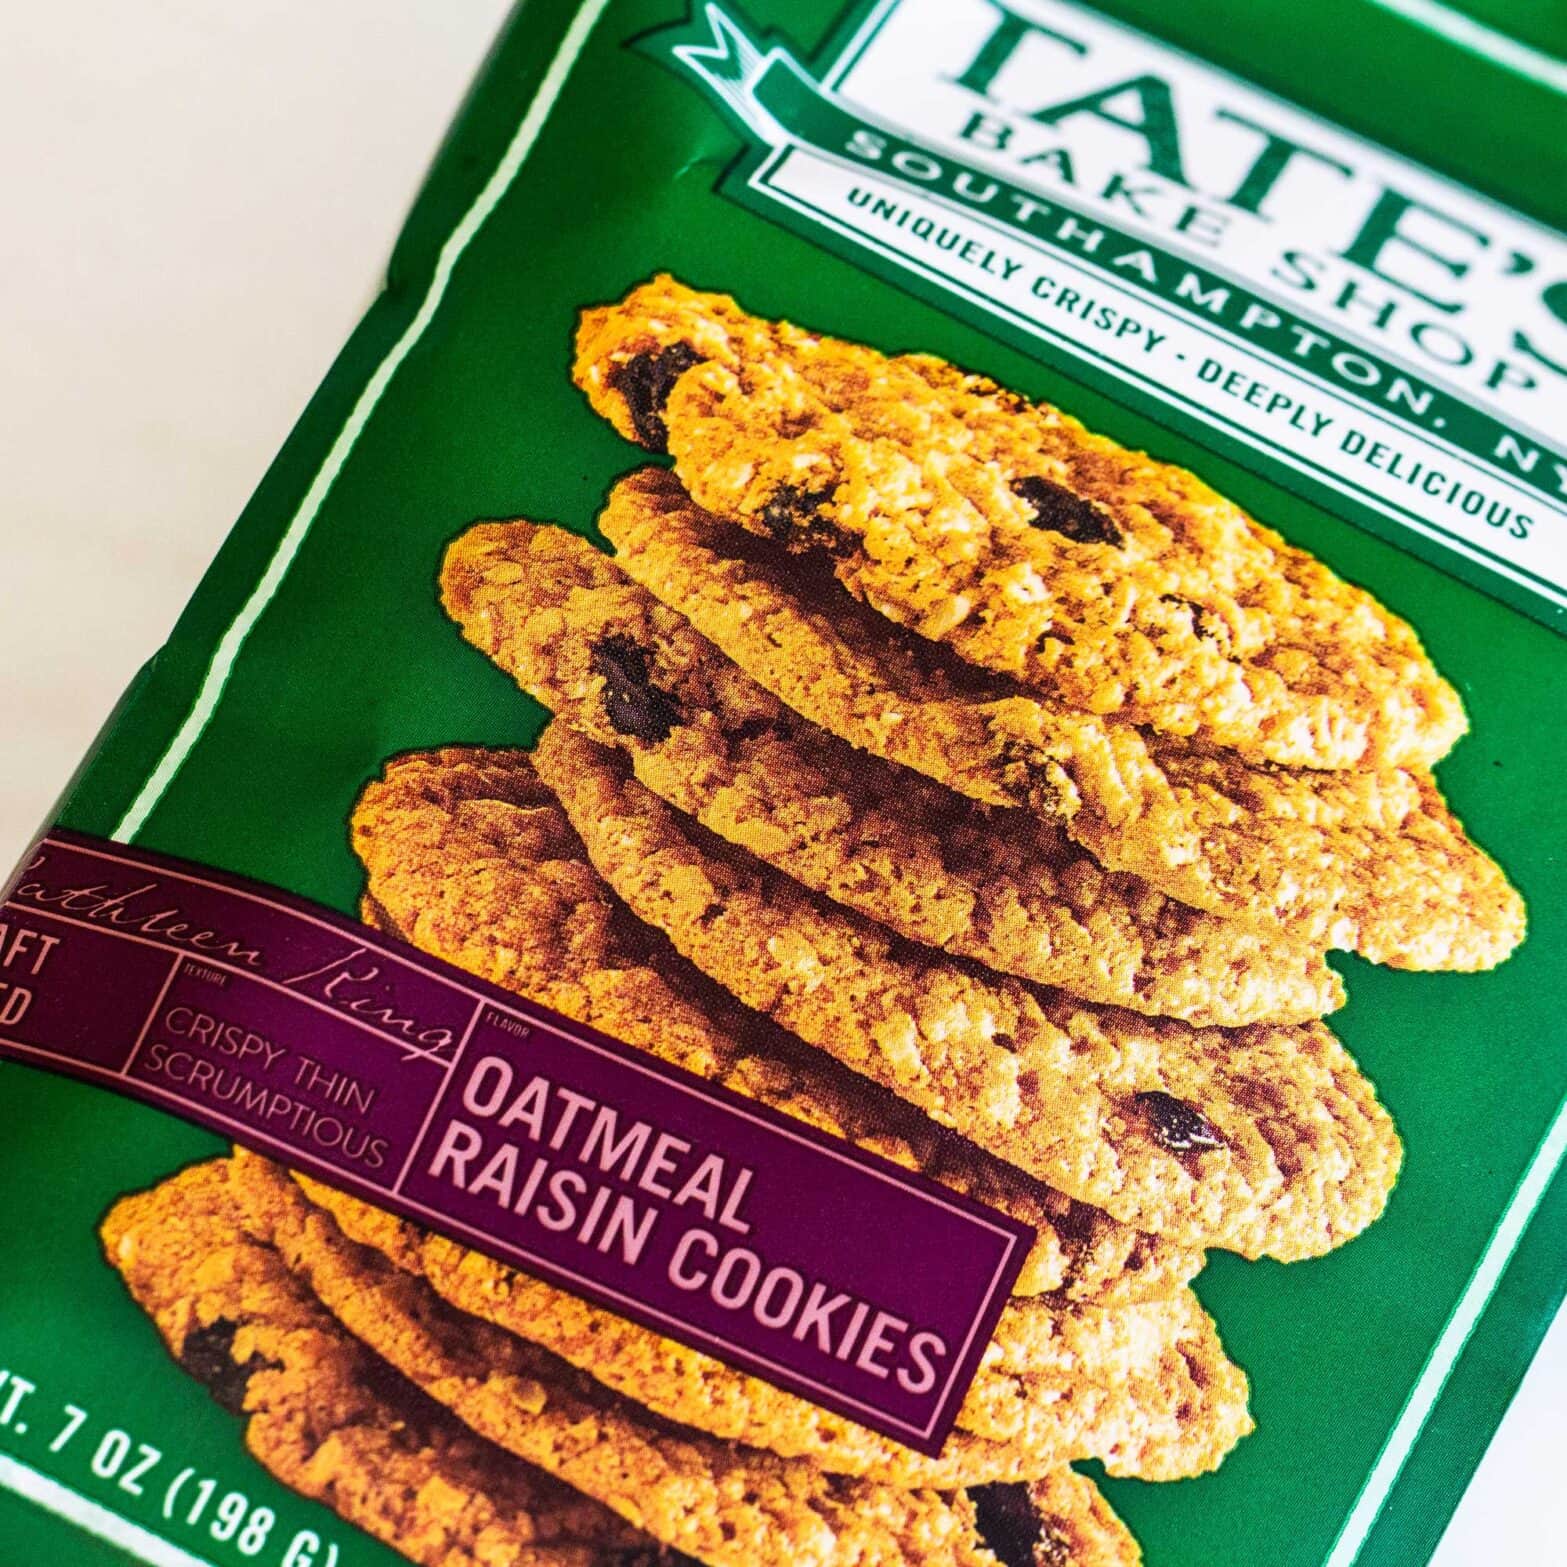 Tate’s Bake Shop Oatmeal Raisin Cookies – 7oz